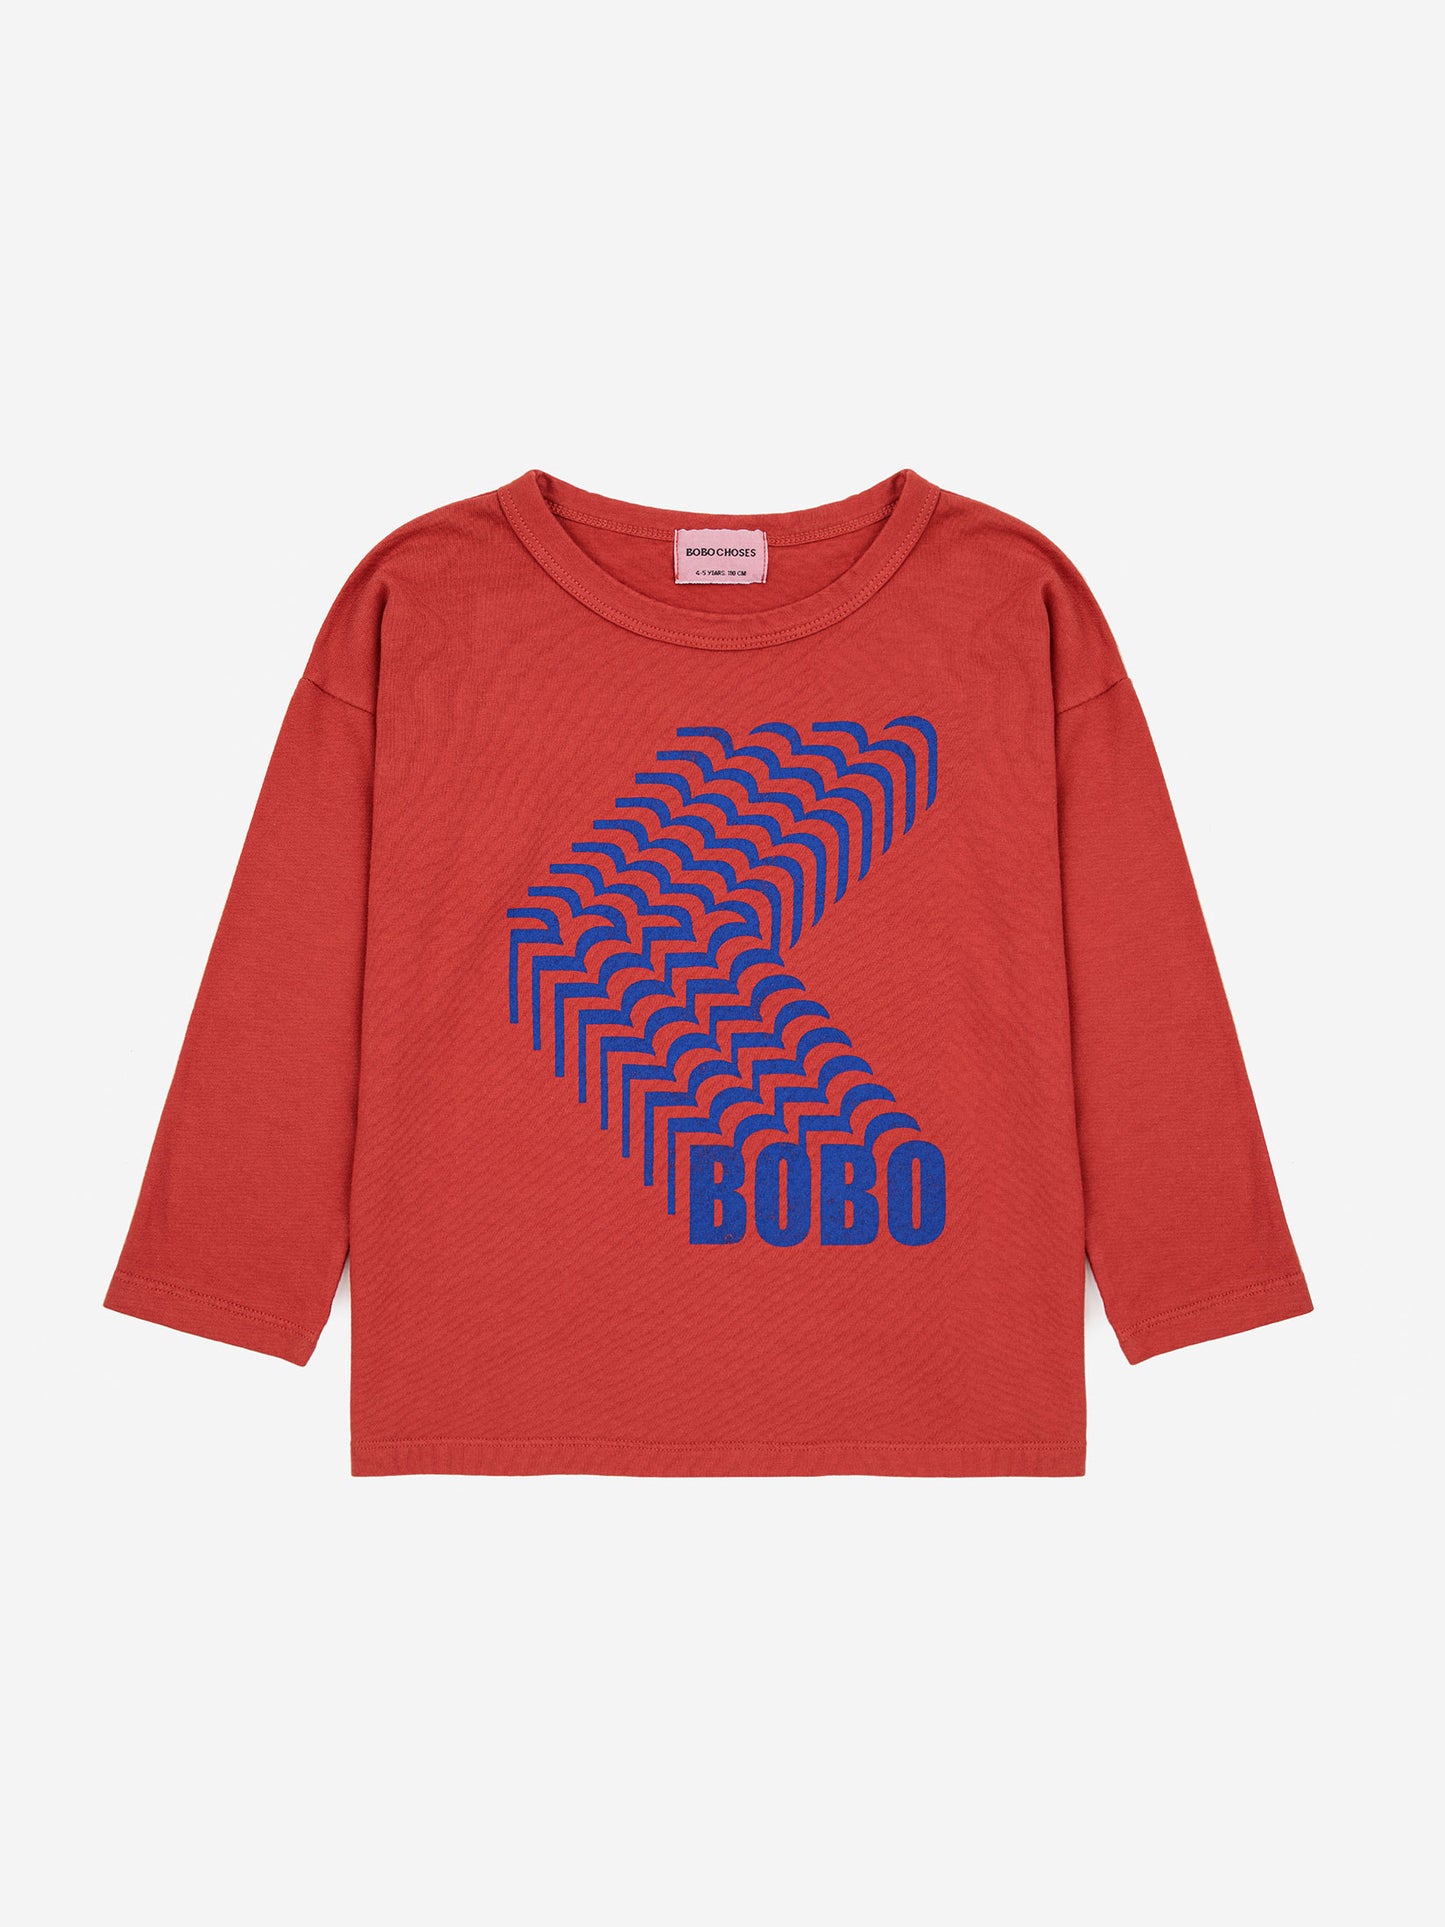 Bobo Shadow long sleeve t-shirt